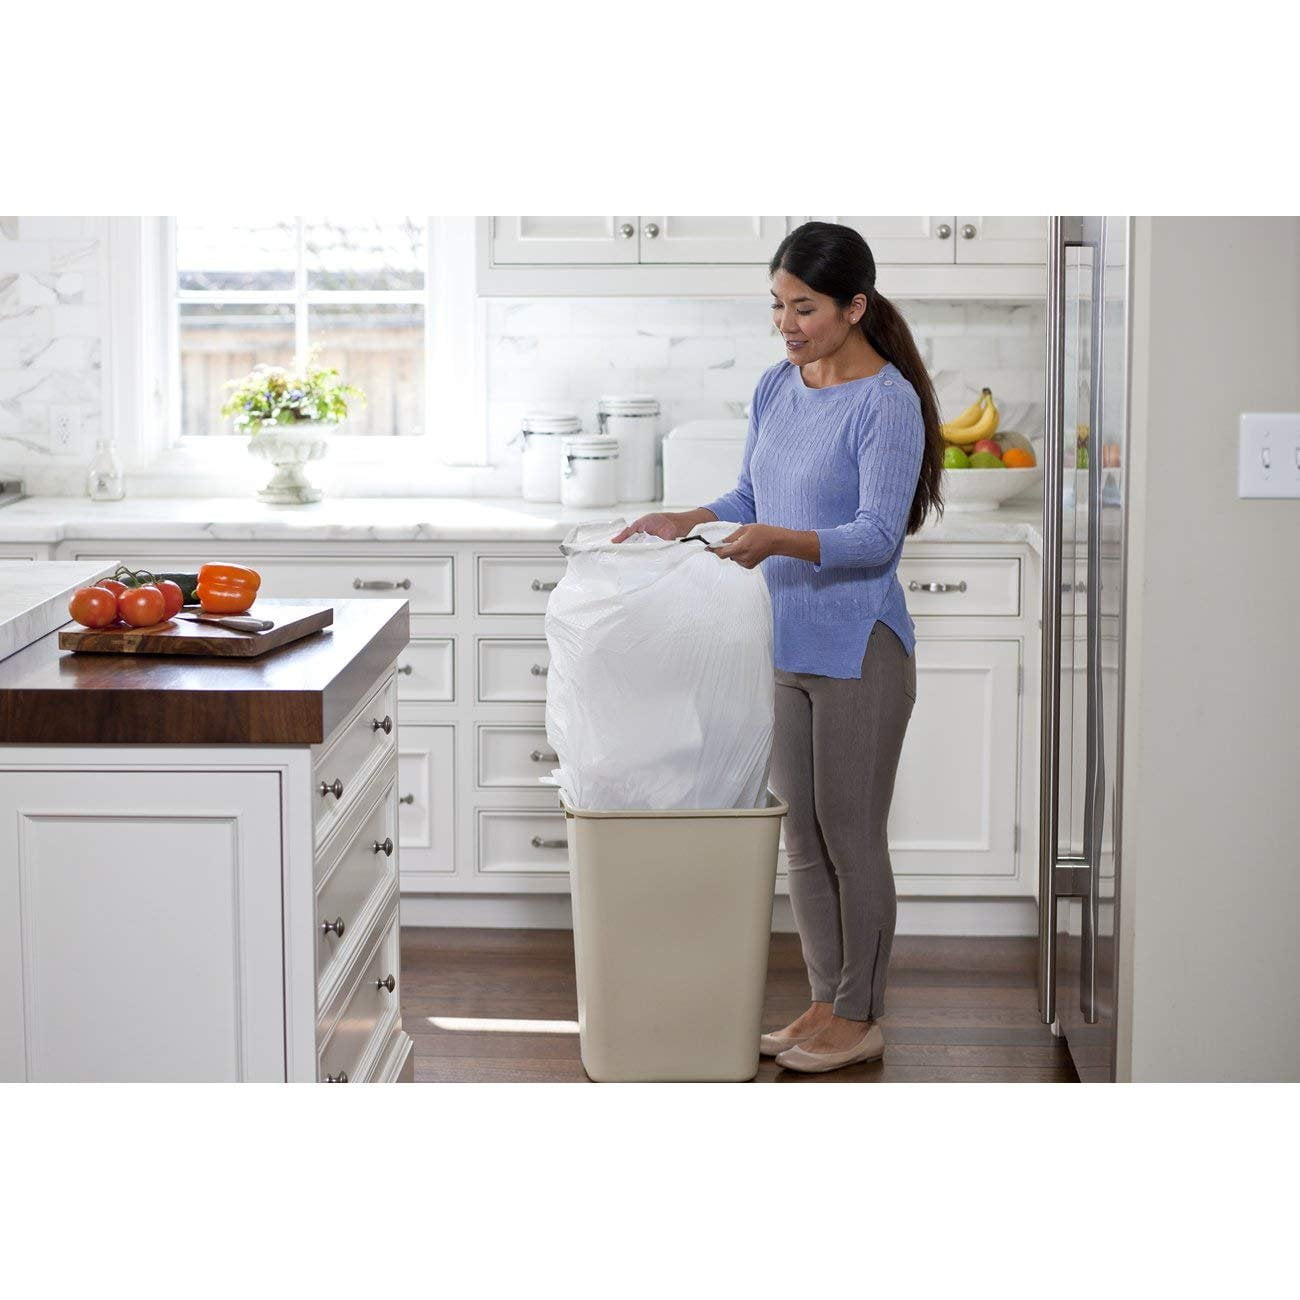 Glad® ForceFlexPlus OdorShield Tall Kitchen Drawstring Trash Bags, 13 gal,  0.9 mil, 24 x 28, White, 34 Bags/Box, 6 Boxes/Carton